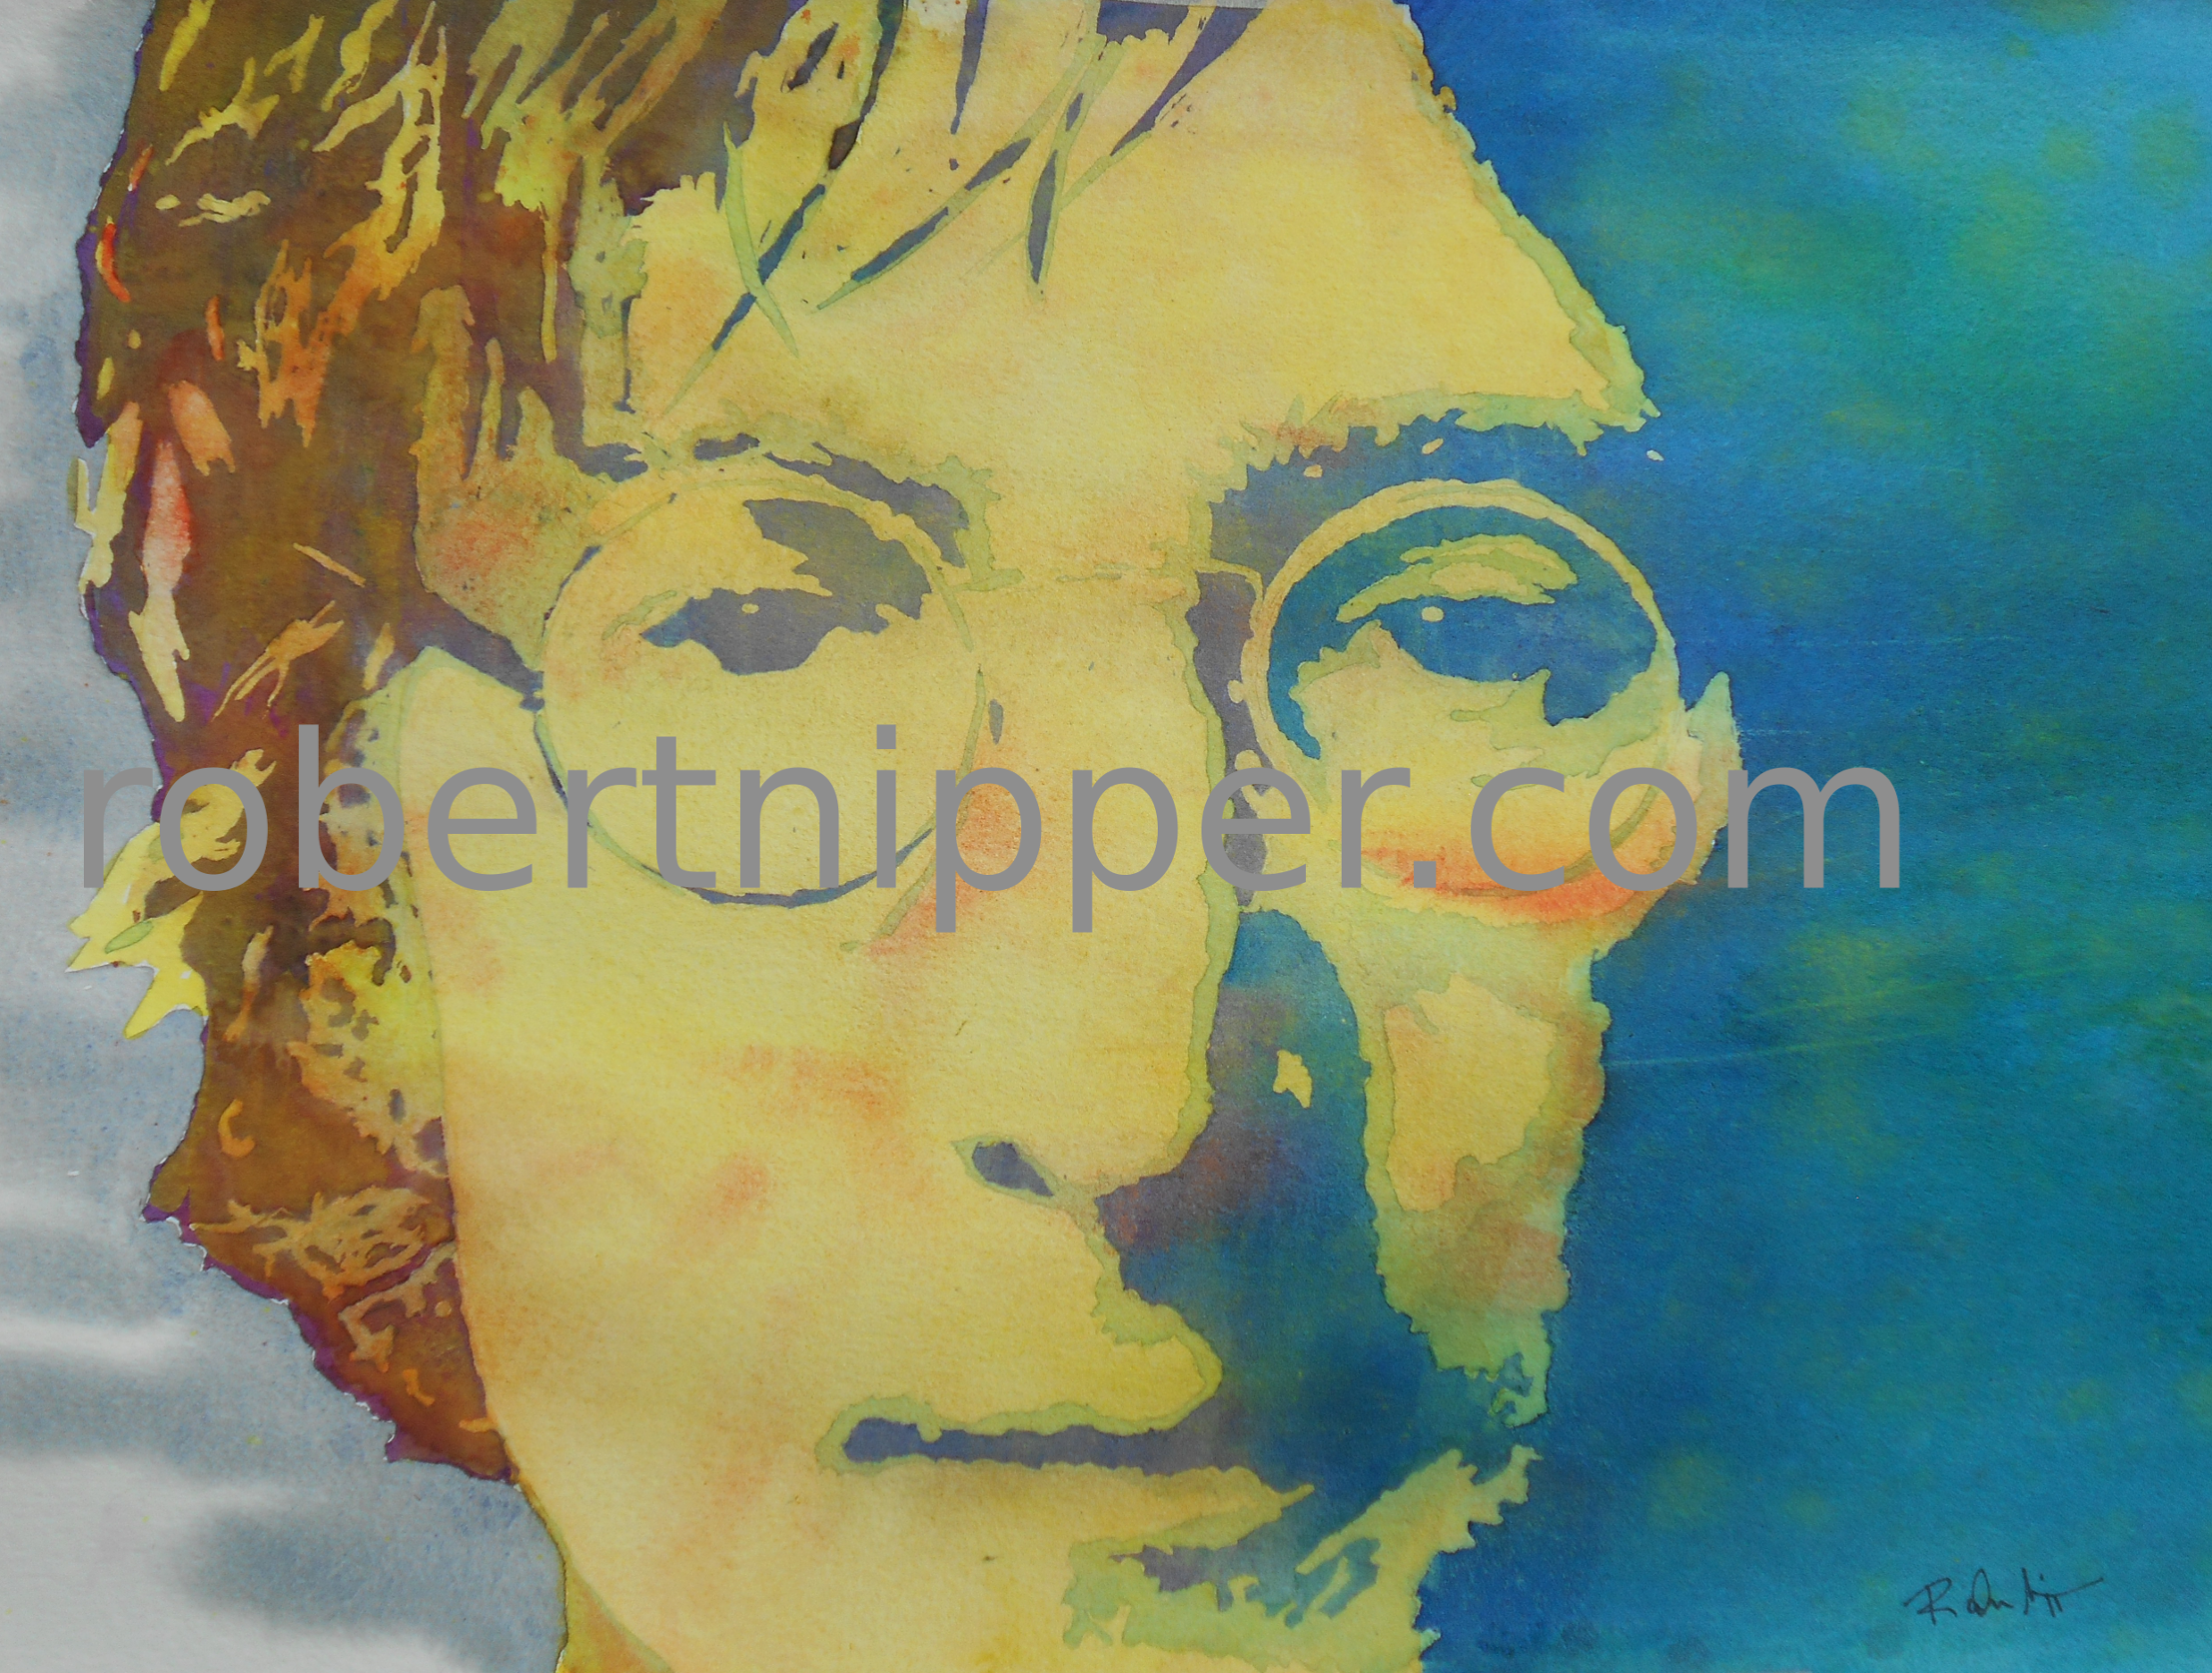 A colorful potrait of John Lennon in watercolor.